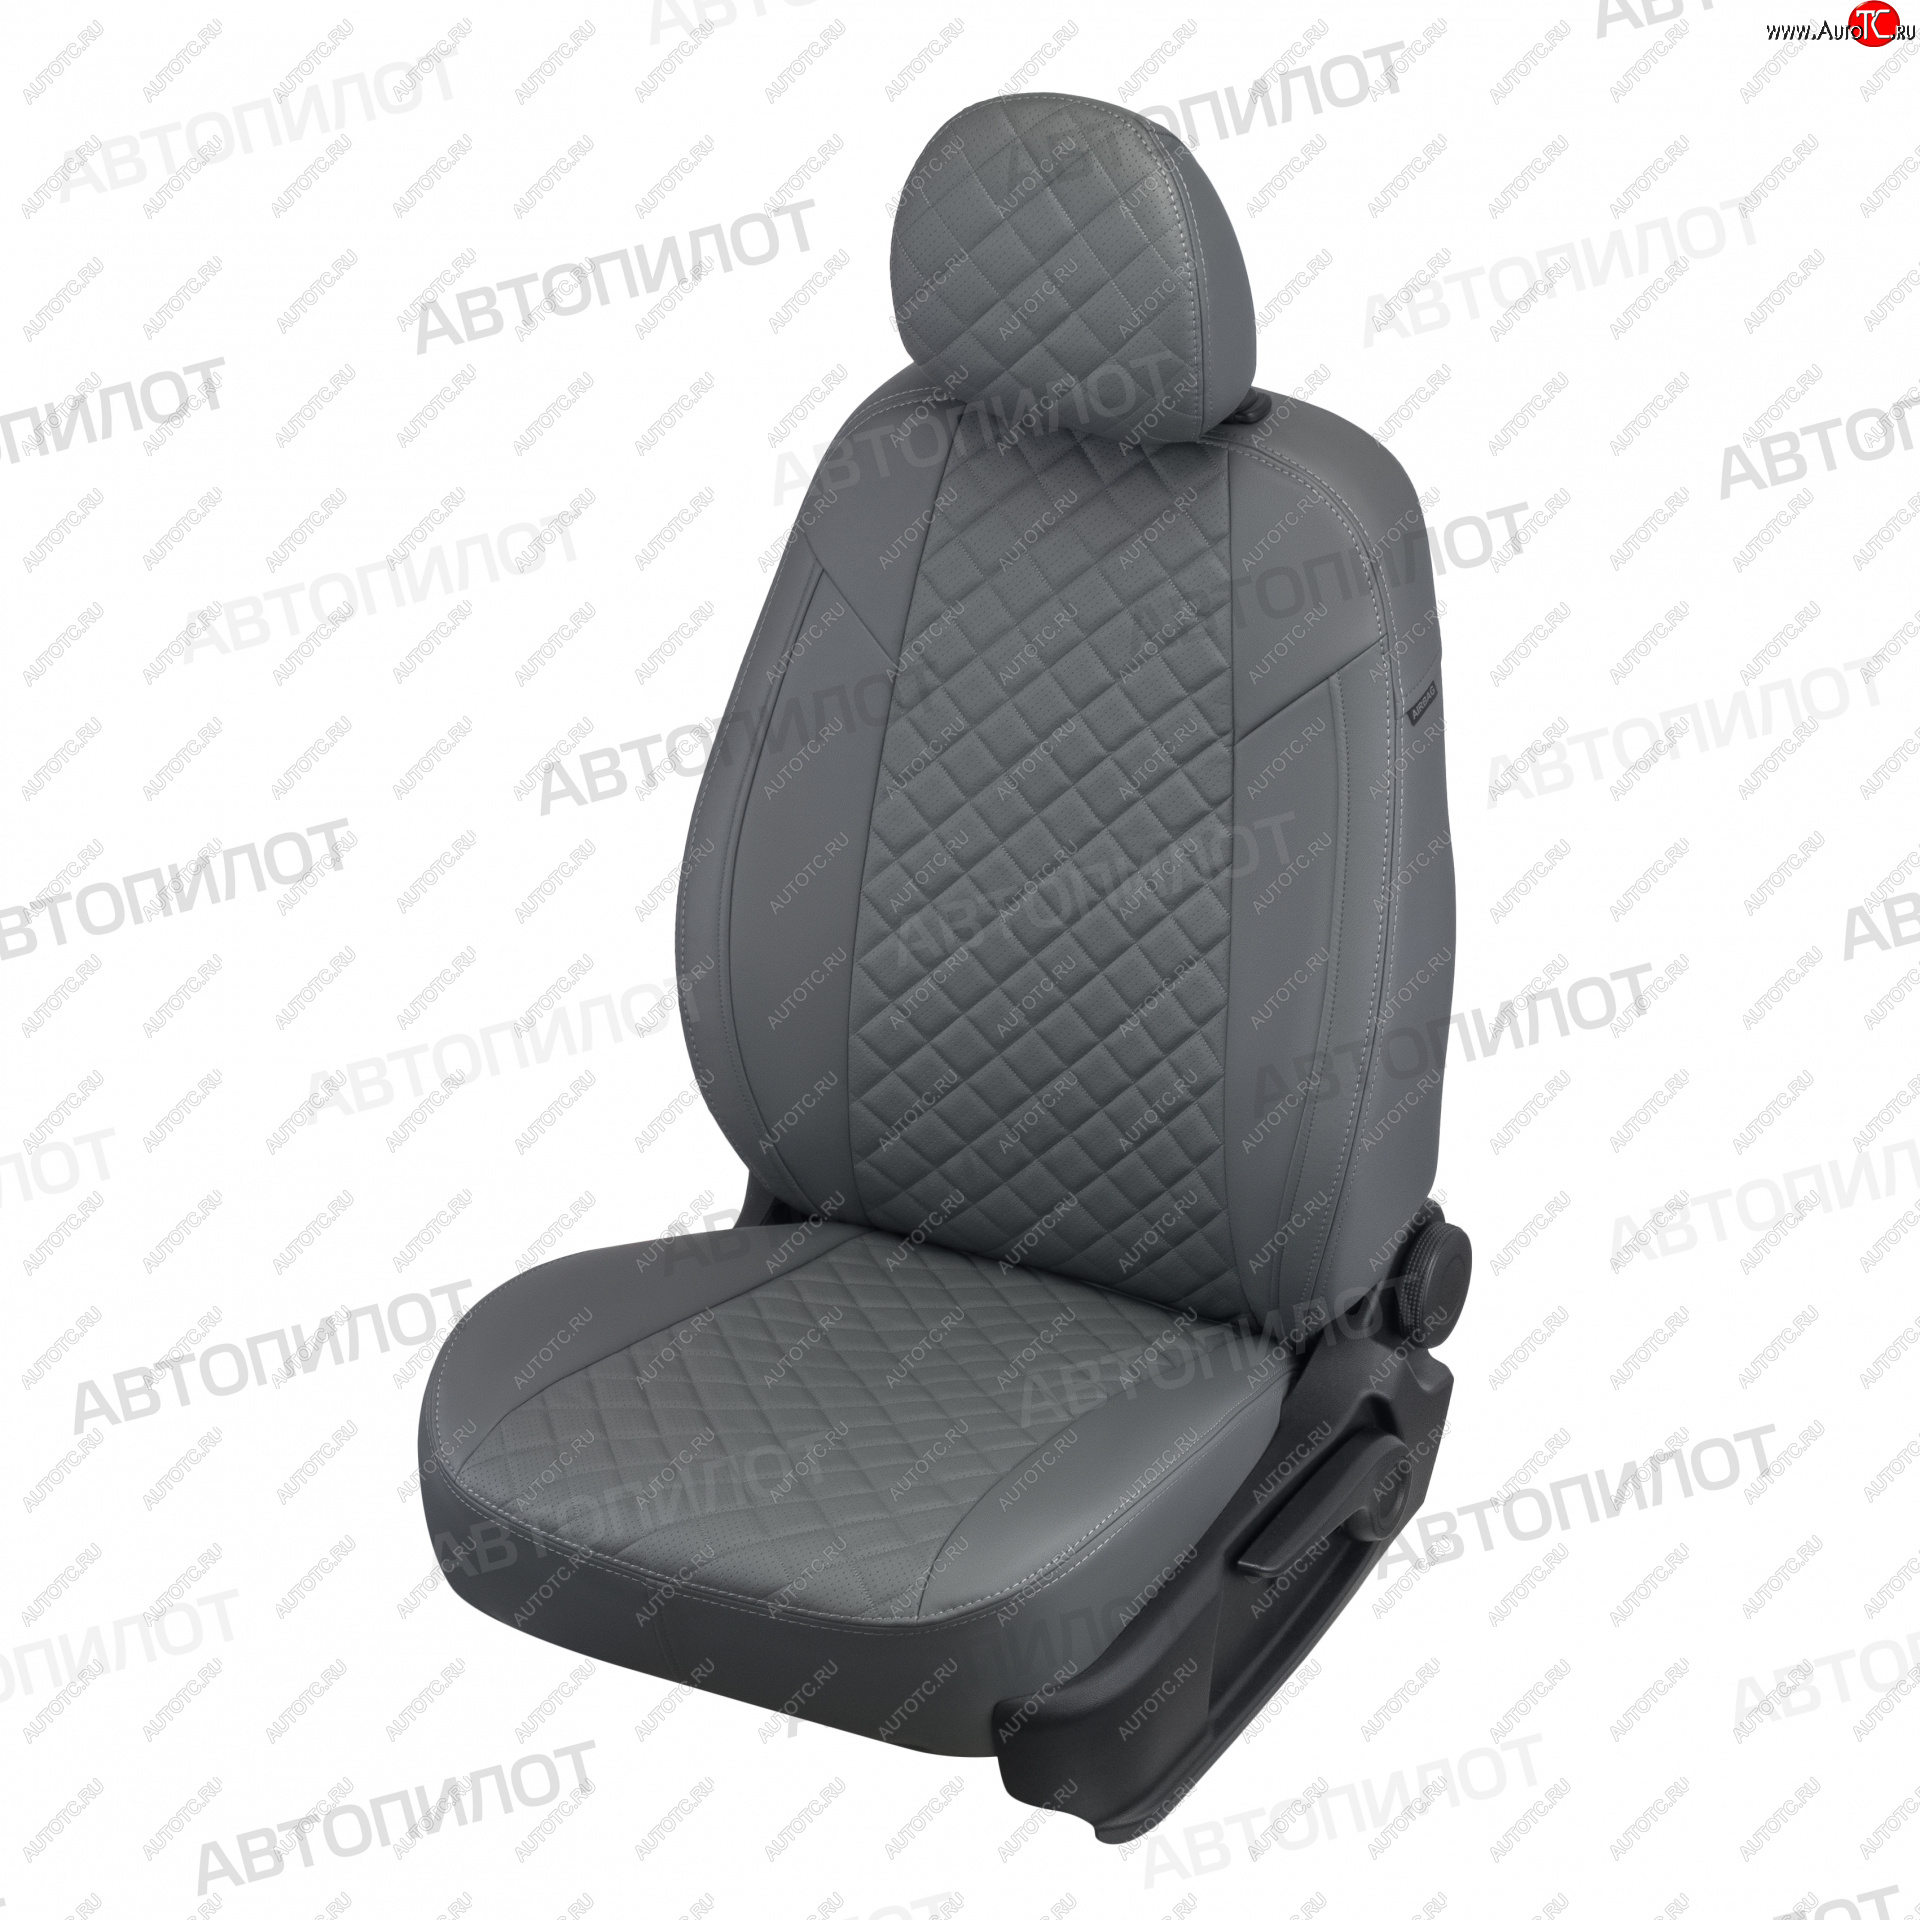 13 999 р. Чехлы сидений (5 мест, экокожа) Автопилот Ромб  Ford Galaxy  2 (2006-2015) (серый)